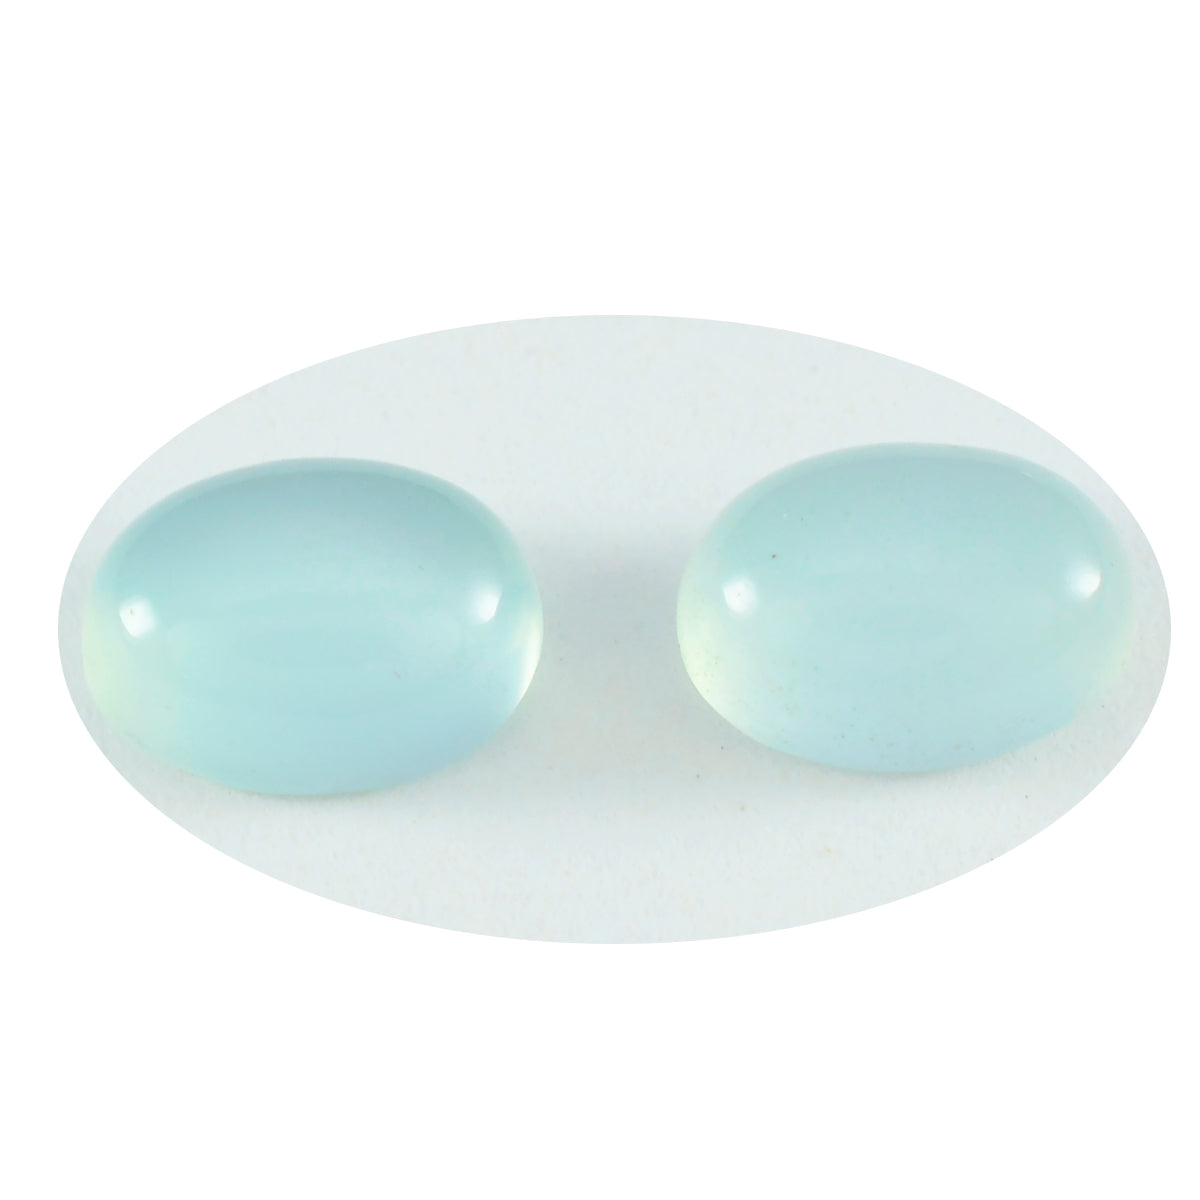 Riyogems 1PC Aqua Chalcedony Cabochon 6x8 mm Oval Shape attractive Quality Gems